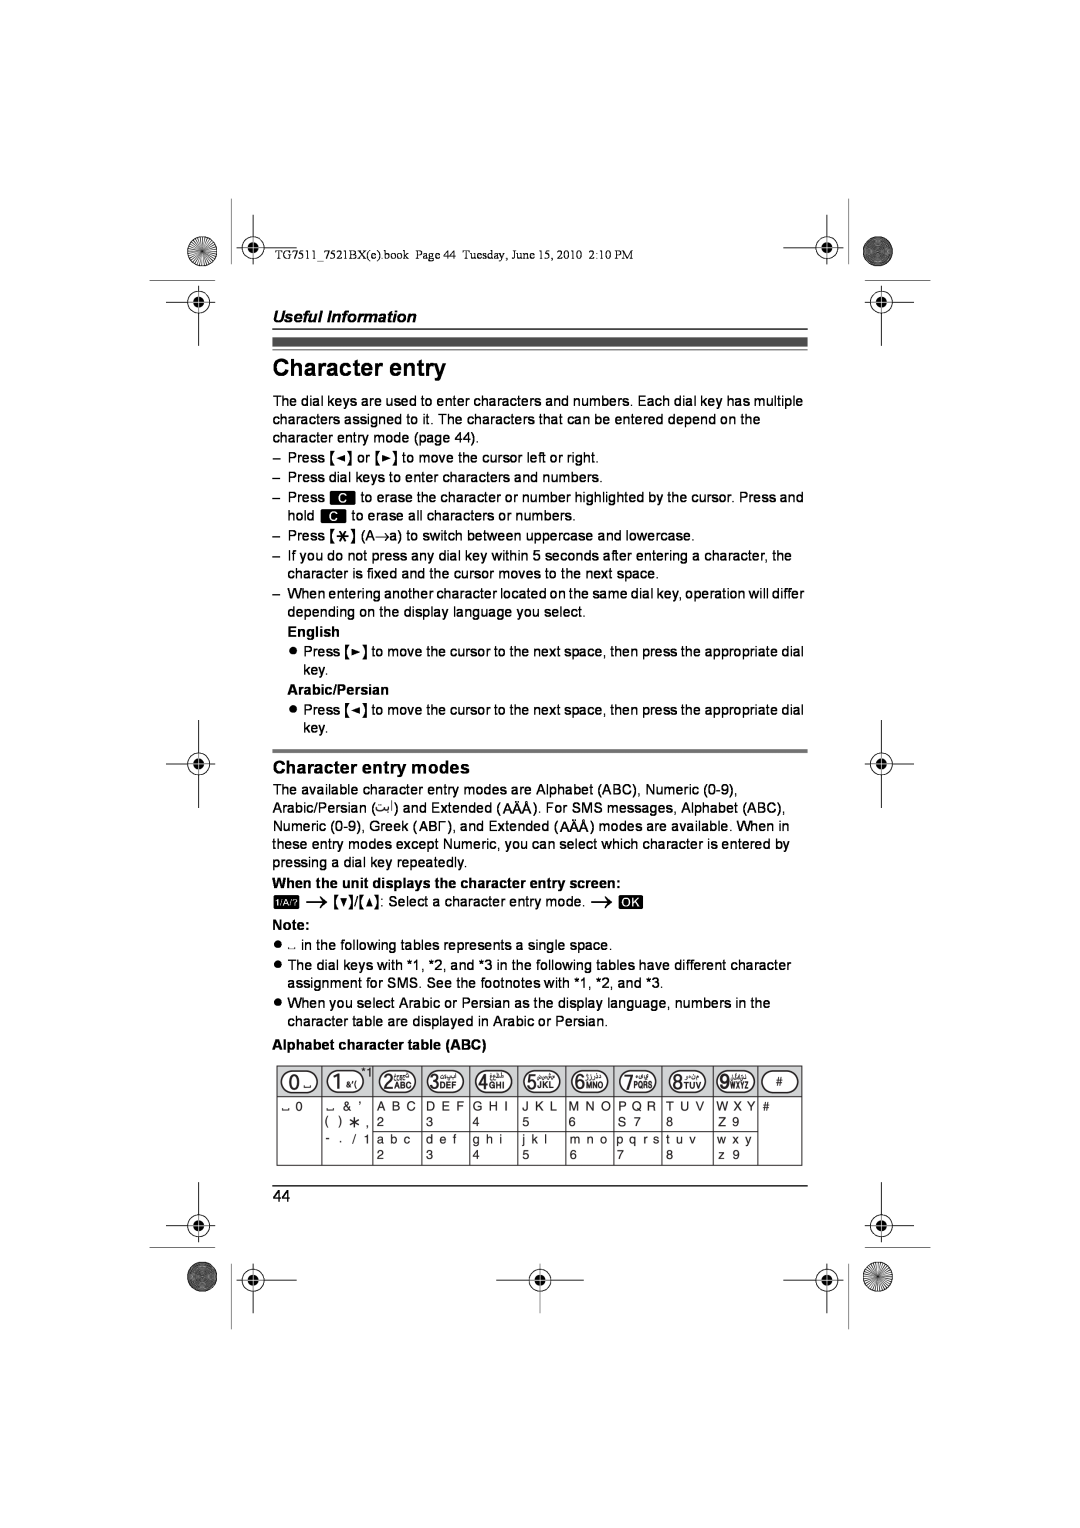 Panasonic KX-TG7521BX Character entry modes, Useful Information, English, Arabic/Persian, Alphabet character table ABC 